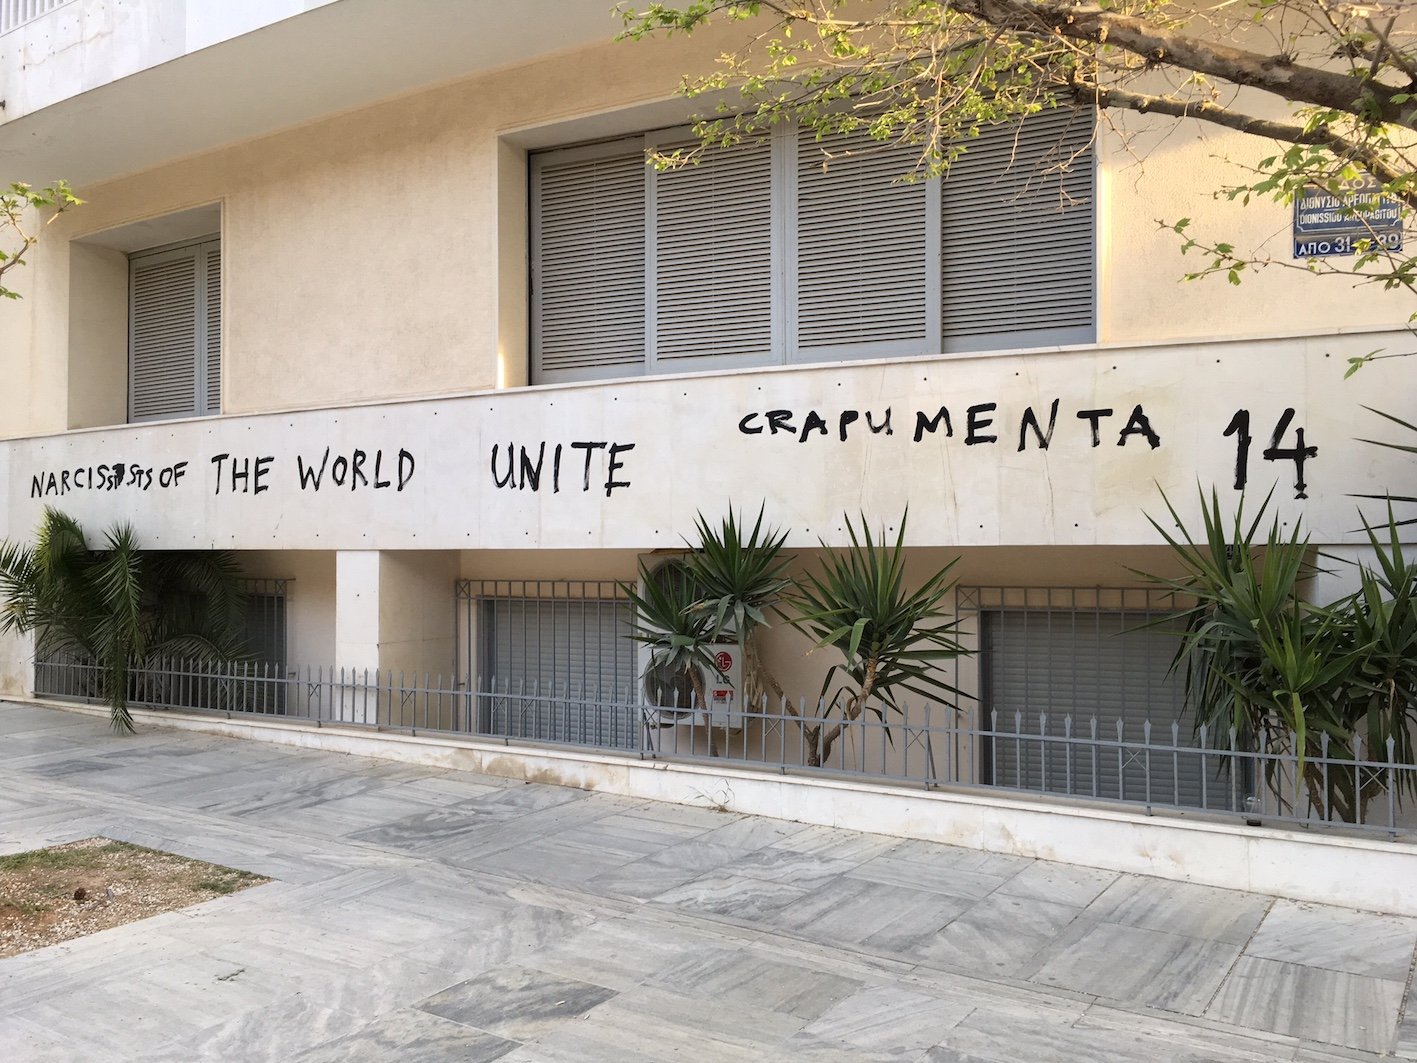 i graffiti ad Atene per "crapumenta"